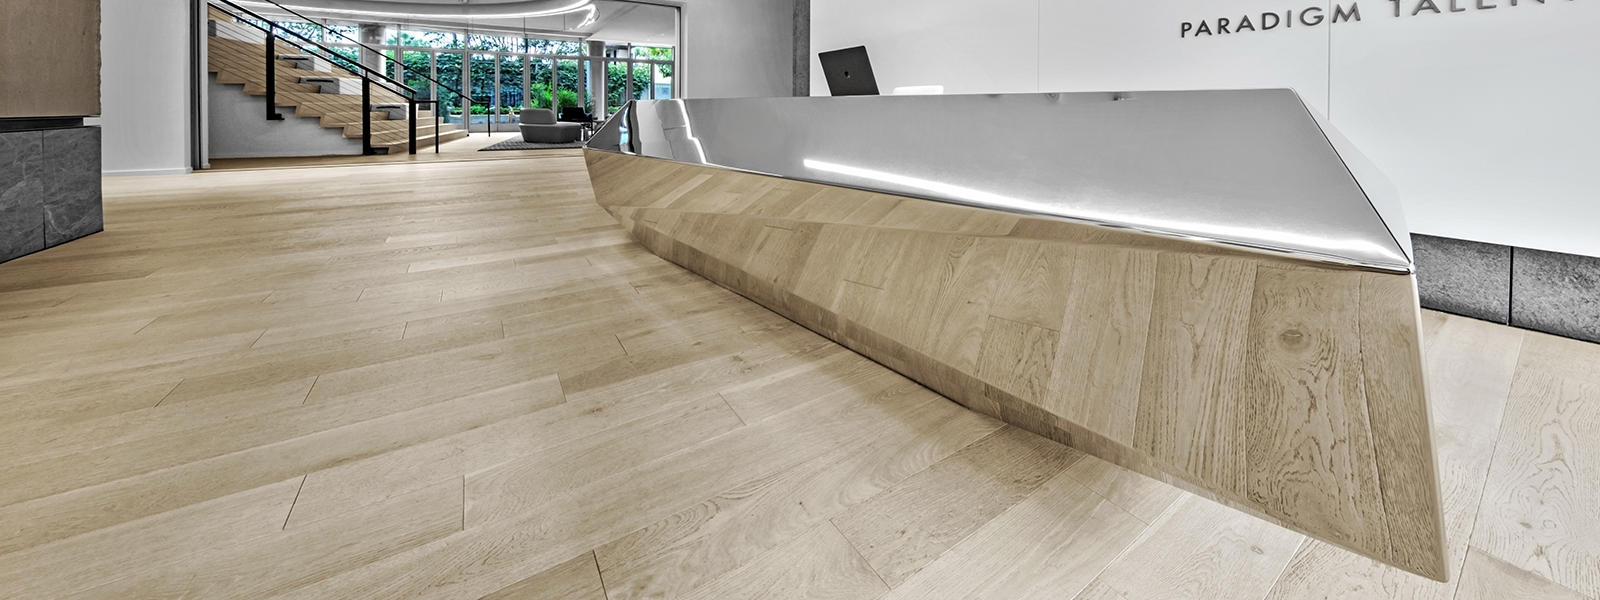 Wide Plank Engineered Hardwood Flooring In European Oak And Walnut